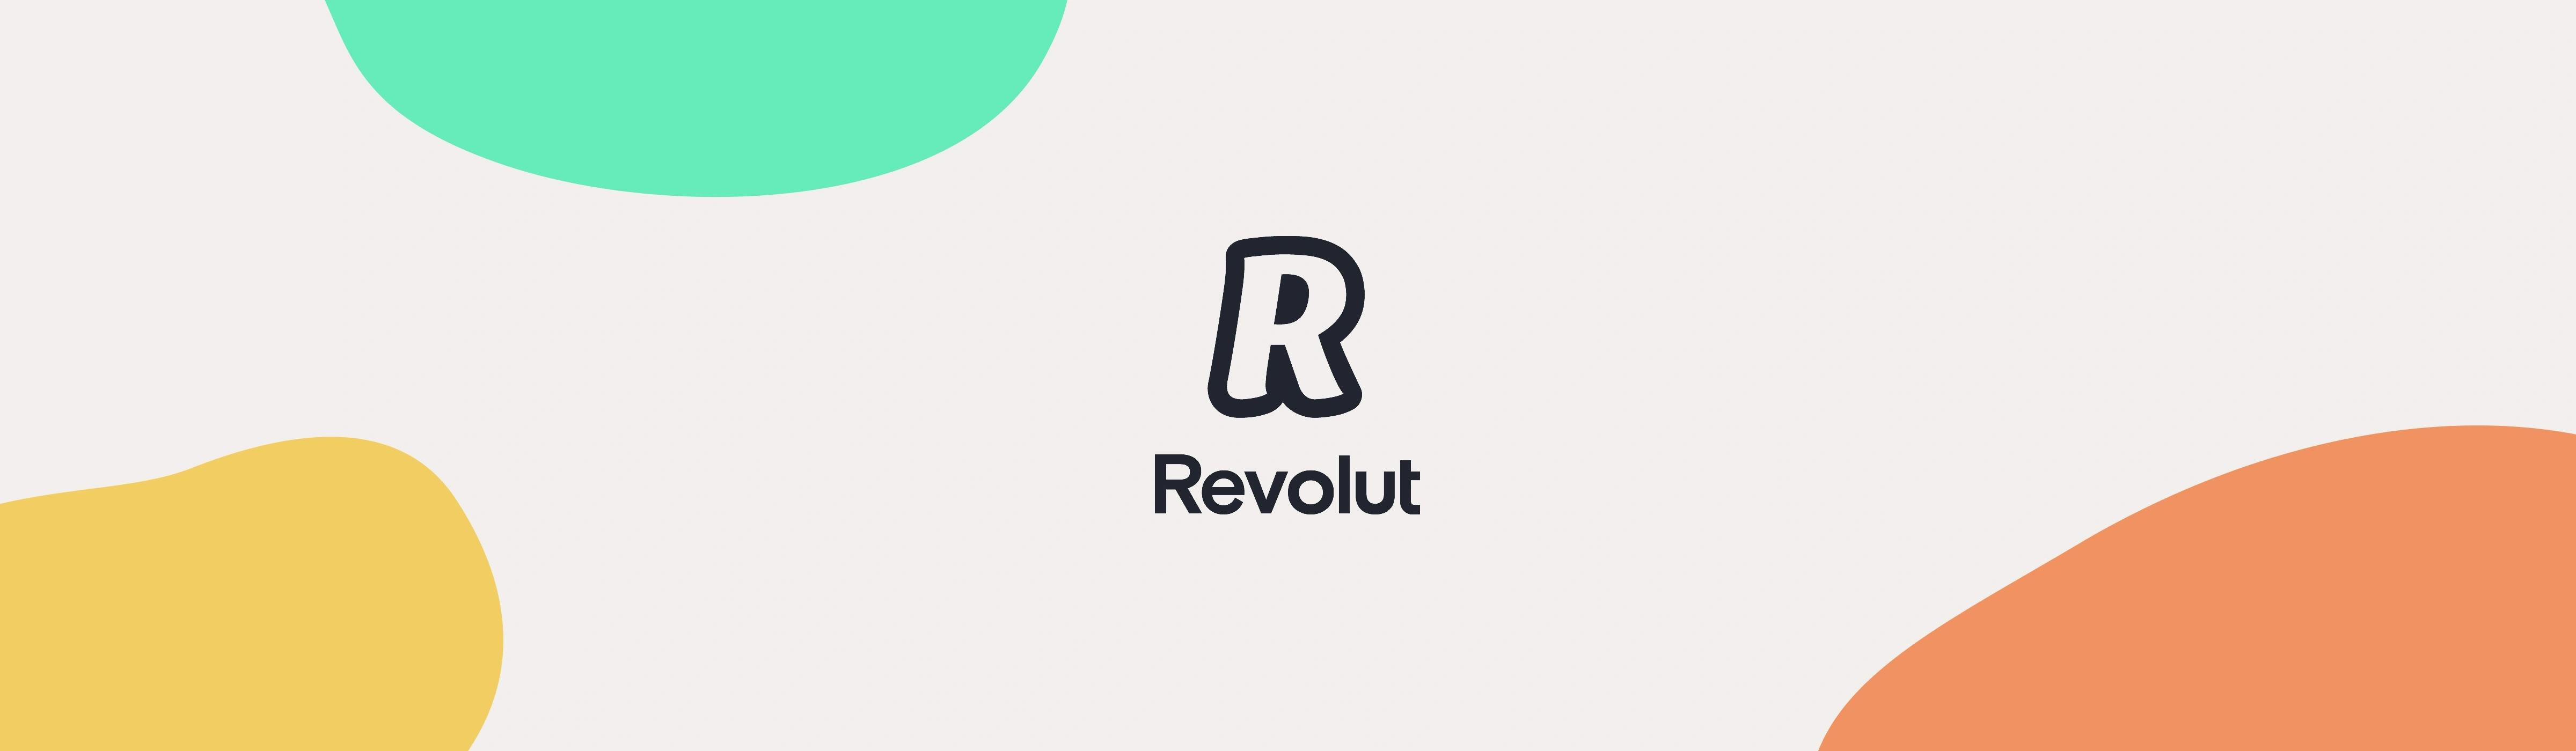 A Revolut logo